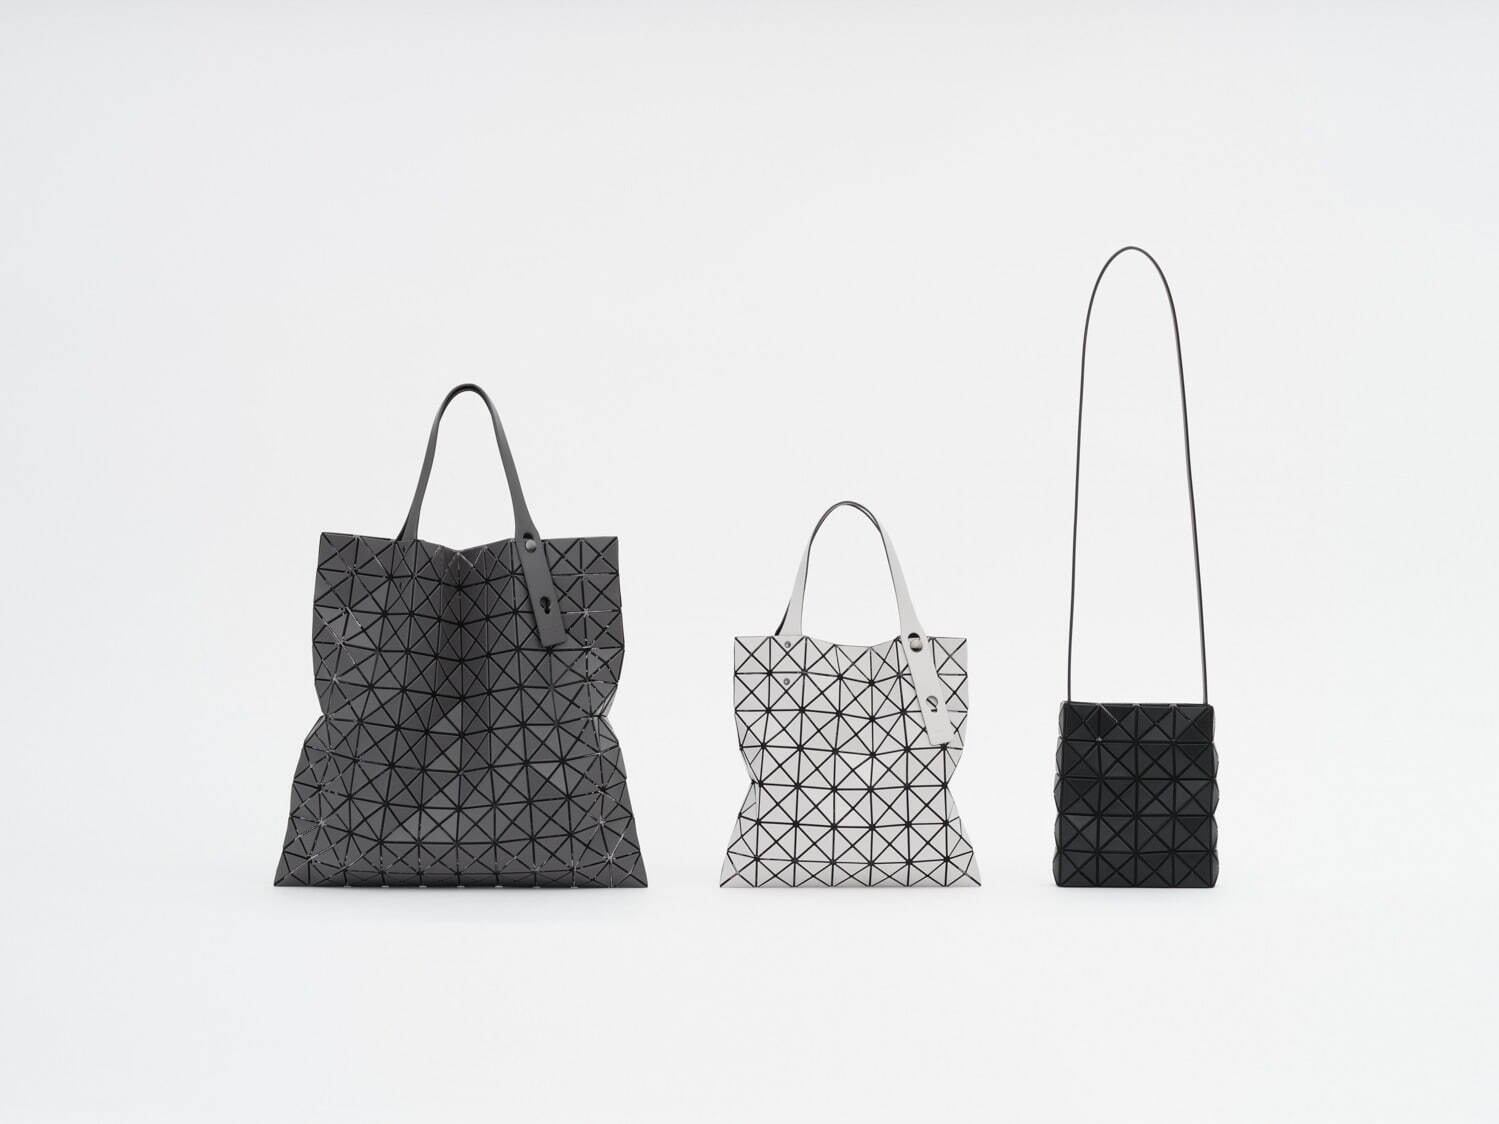 「PRISM MATTE」
Tote bag(H395 x W395) 55,000円
Small Tote bag(H275 x W275) 44,000円
Shoulder bag(H195×W160×D40) 39,600円
